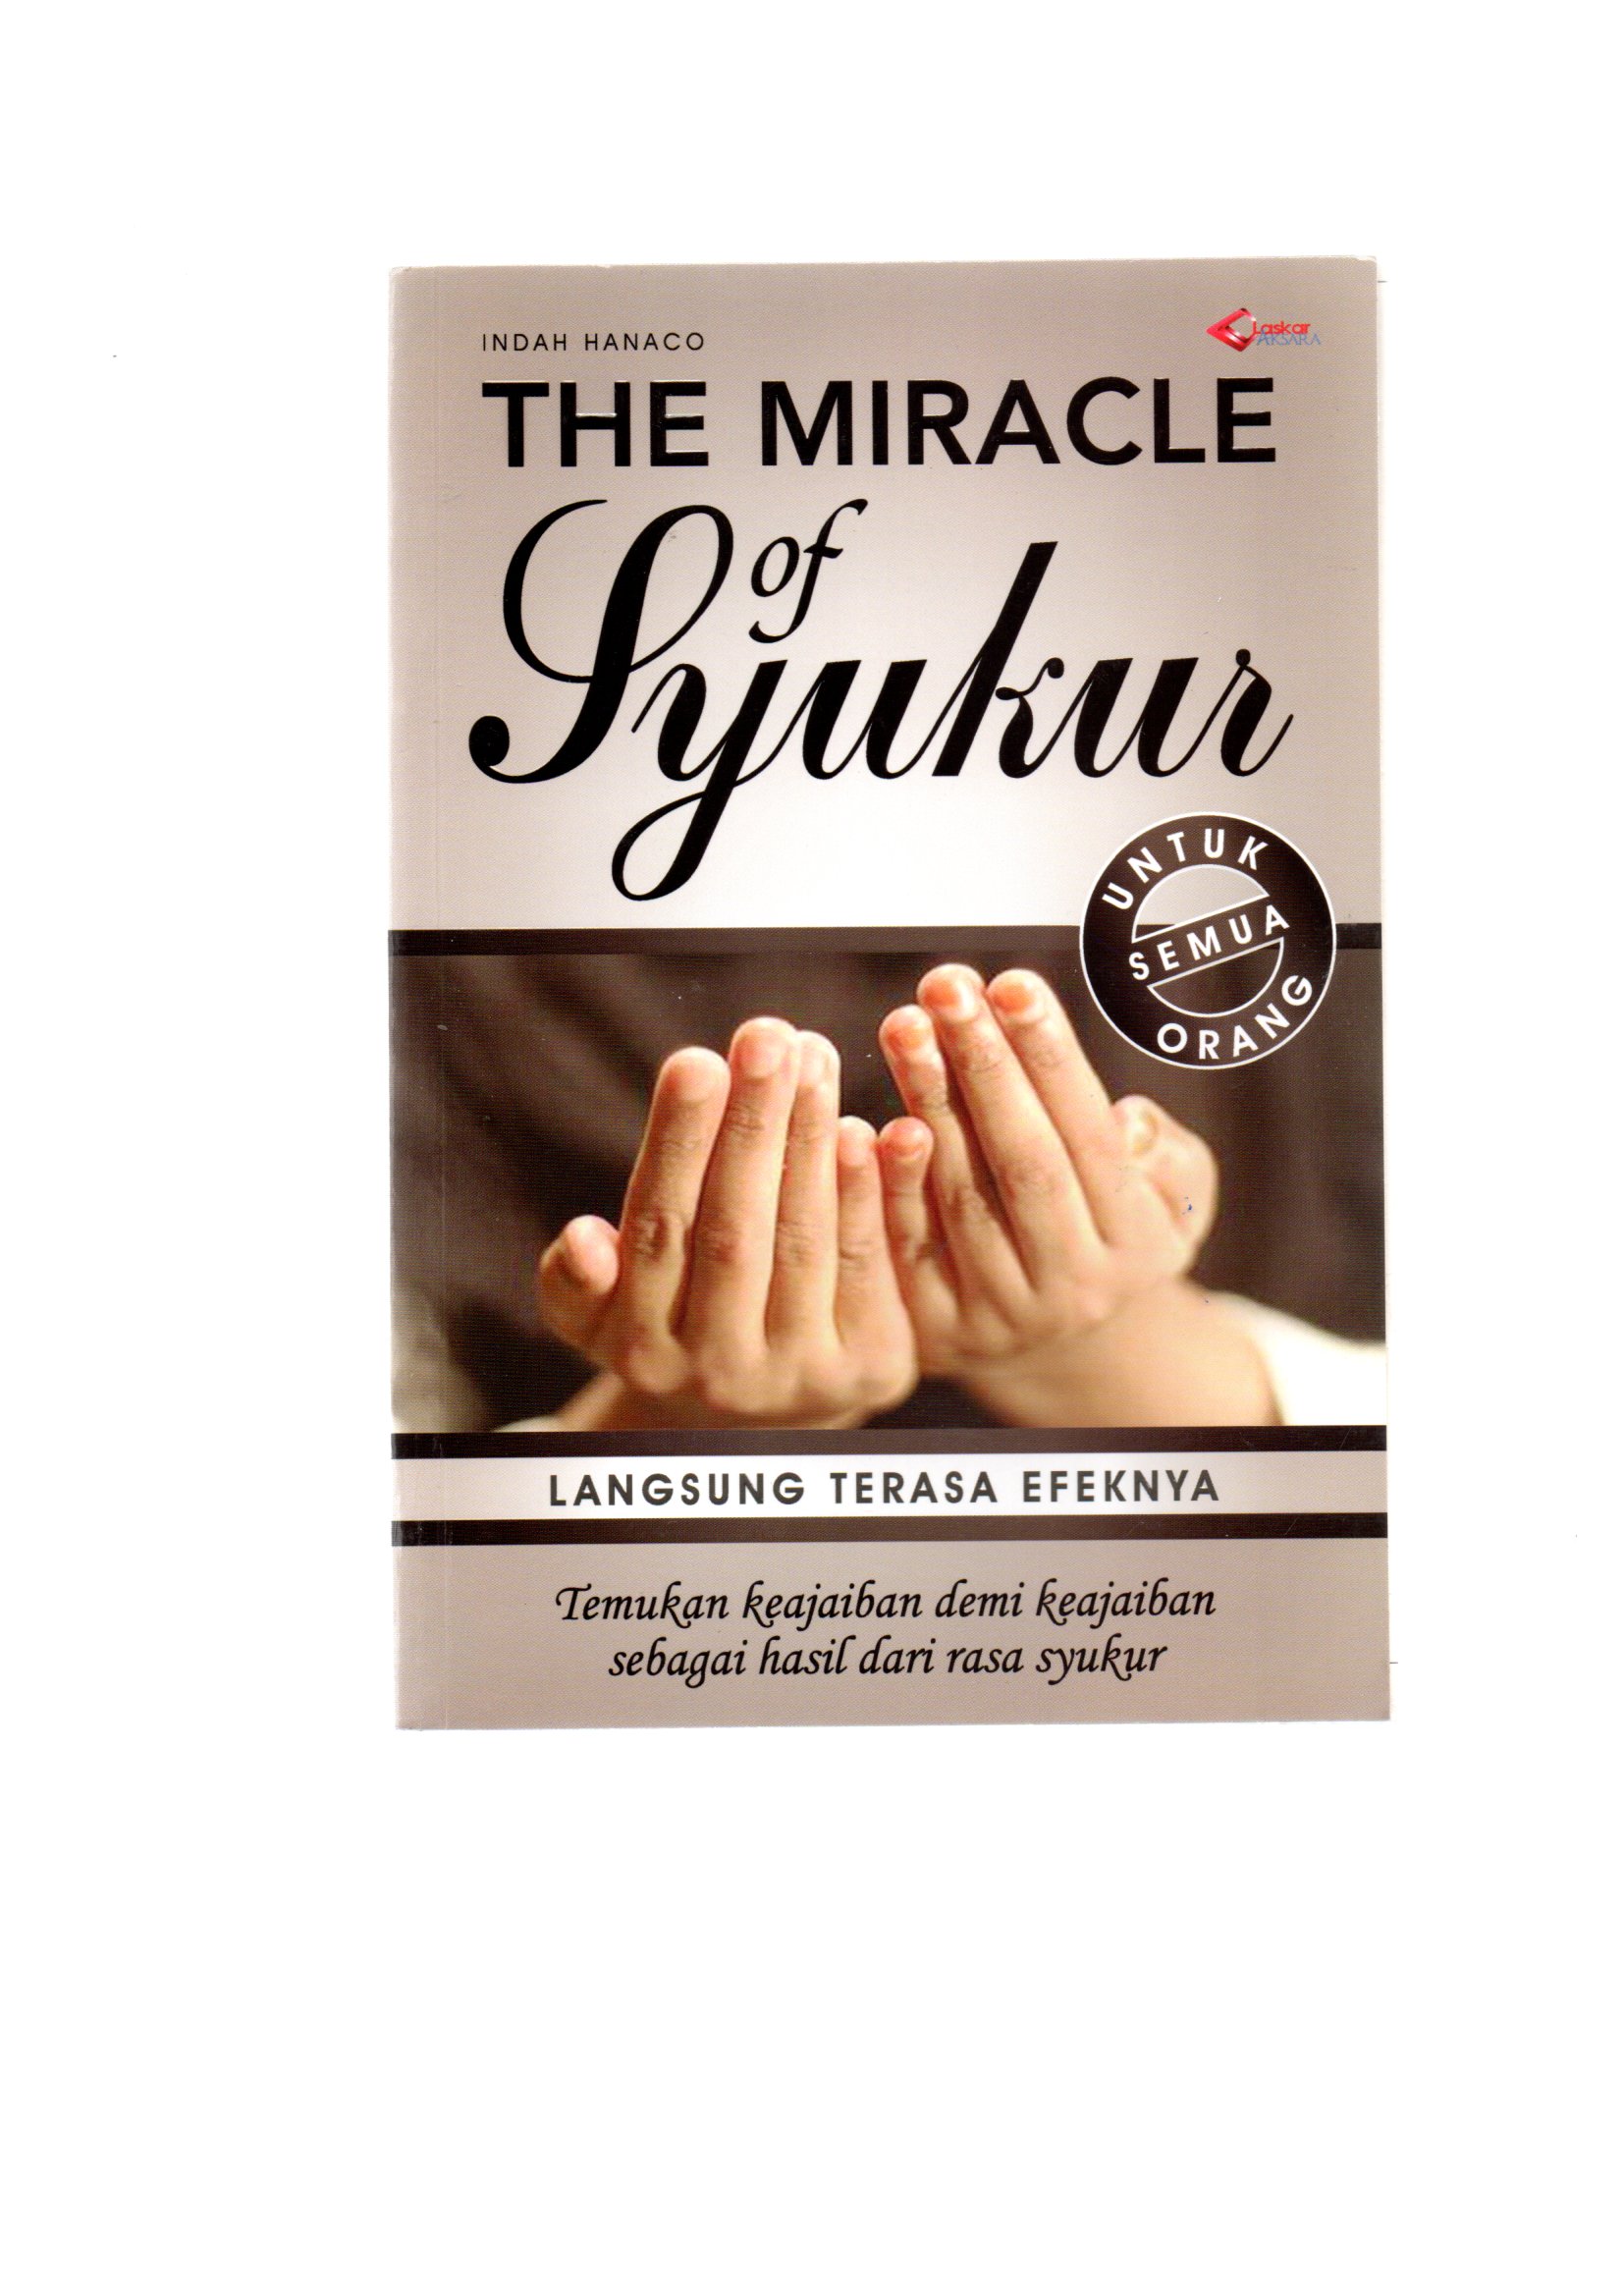 The miracle of syukur